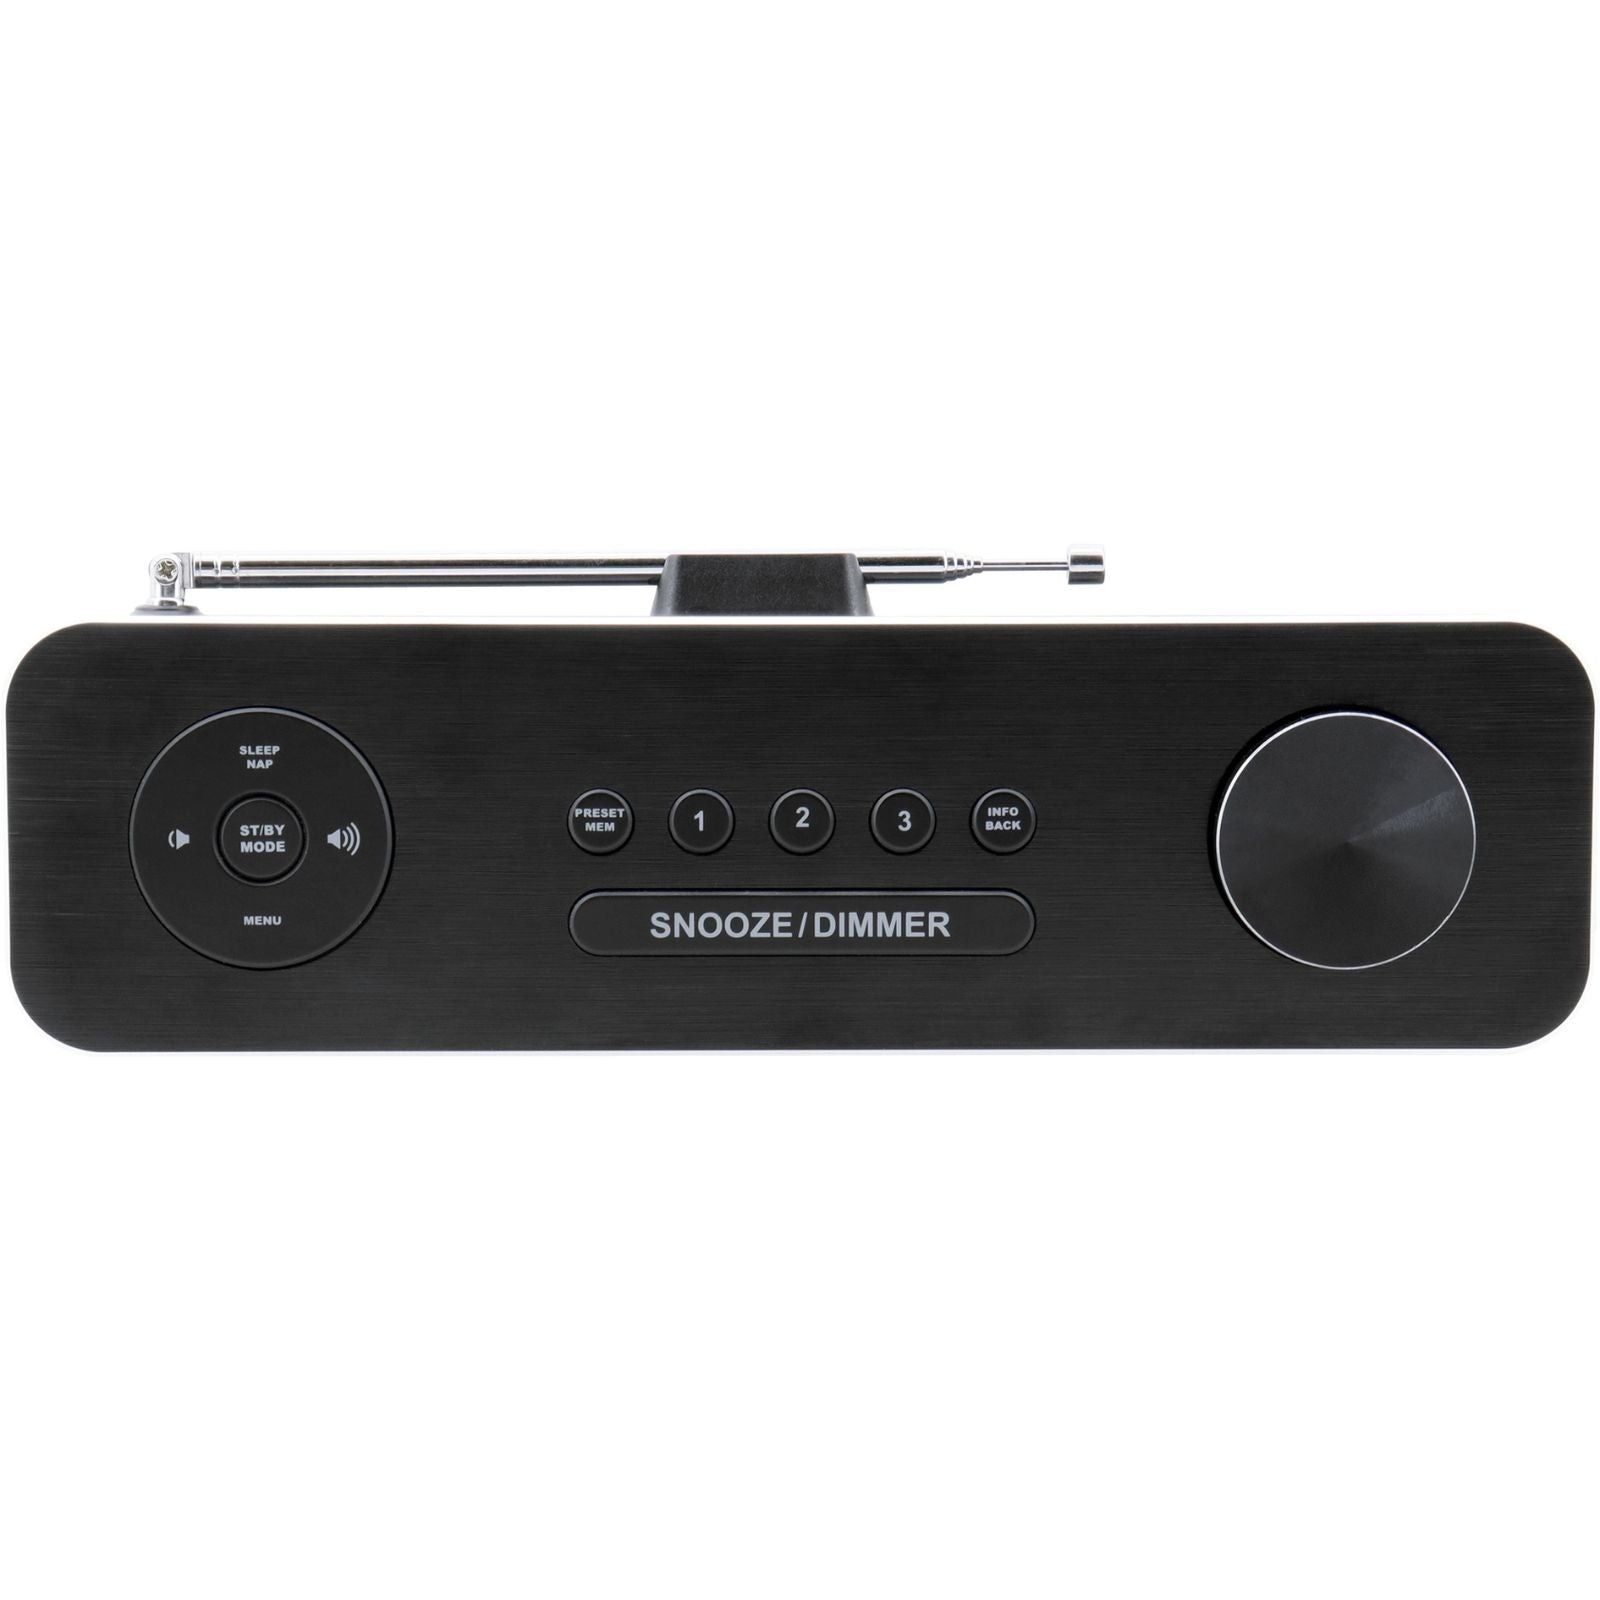 Radio portable Soundmaster HighLine DAB700SW Boombox DAB+ FM avec USB SD Bluetooth